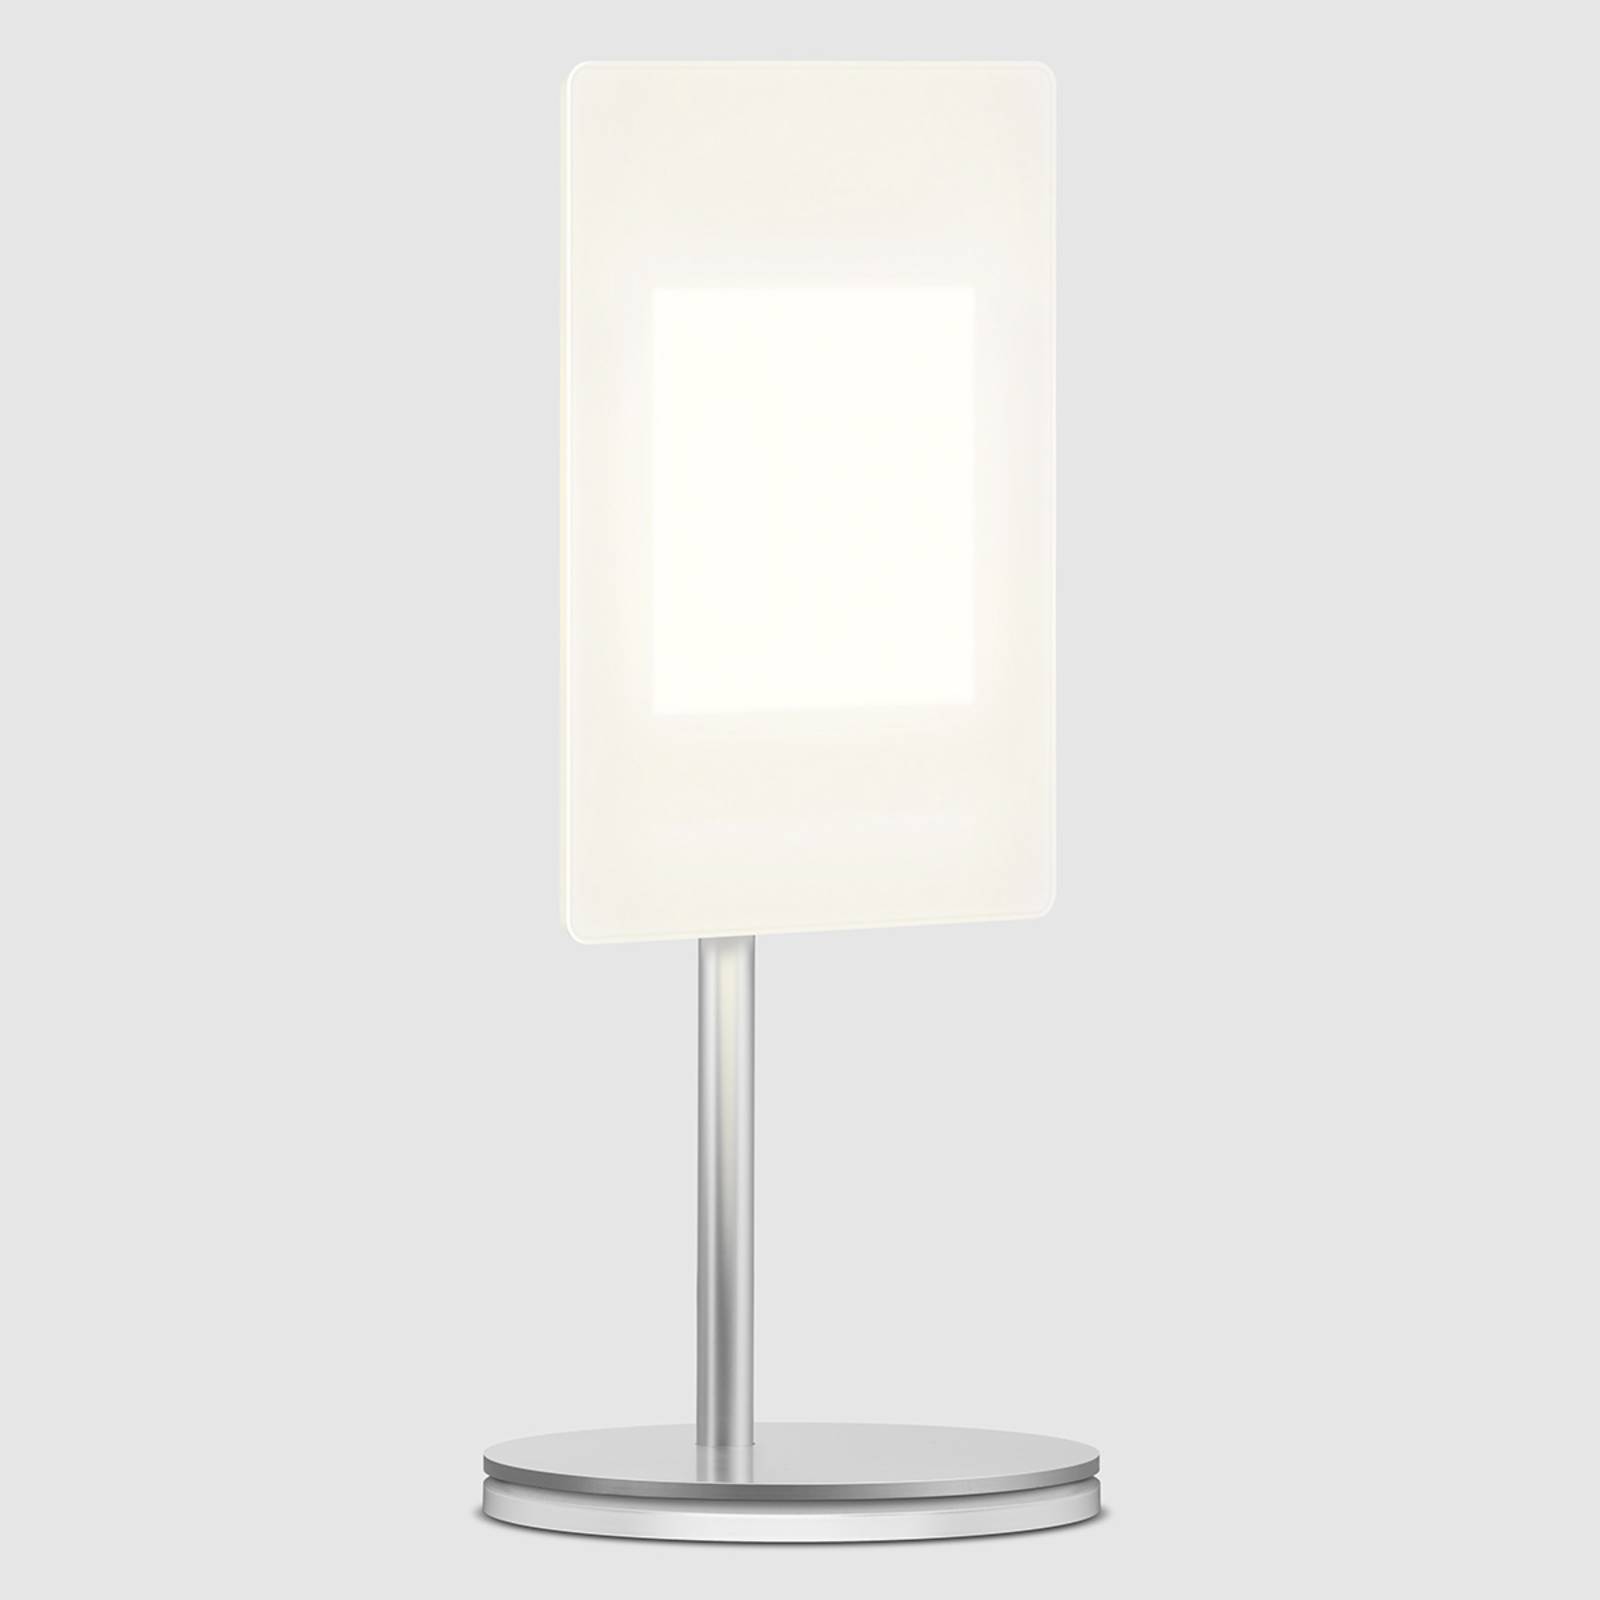 Image of Lampe à poser OLED OMLED One t1 avec OLED, blanc 4260744970182